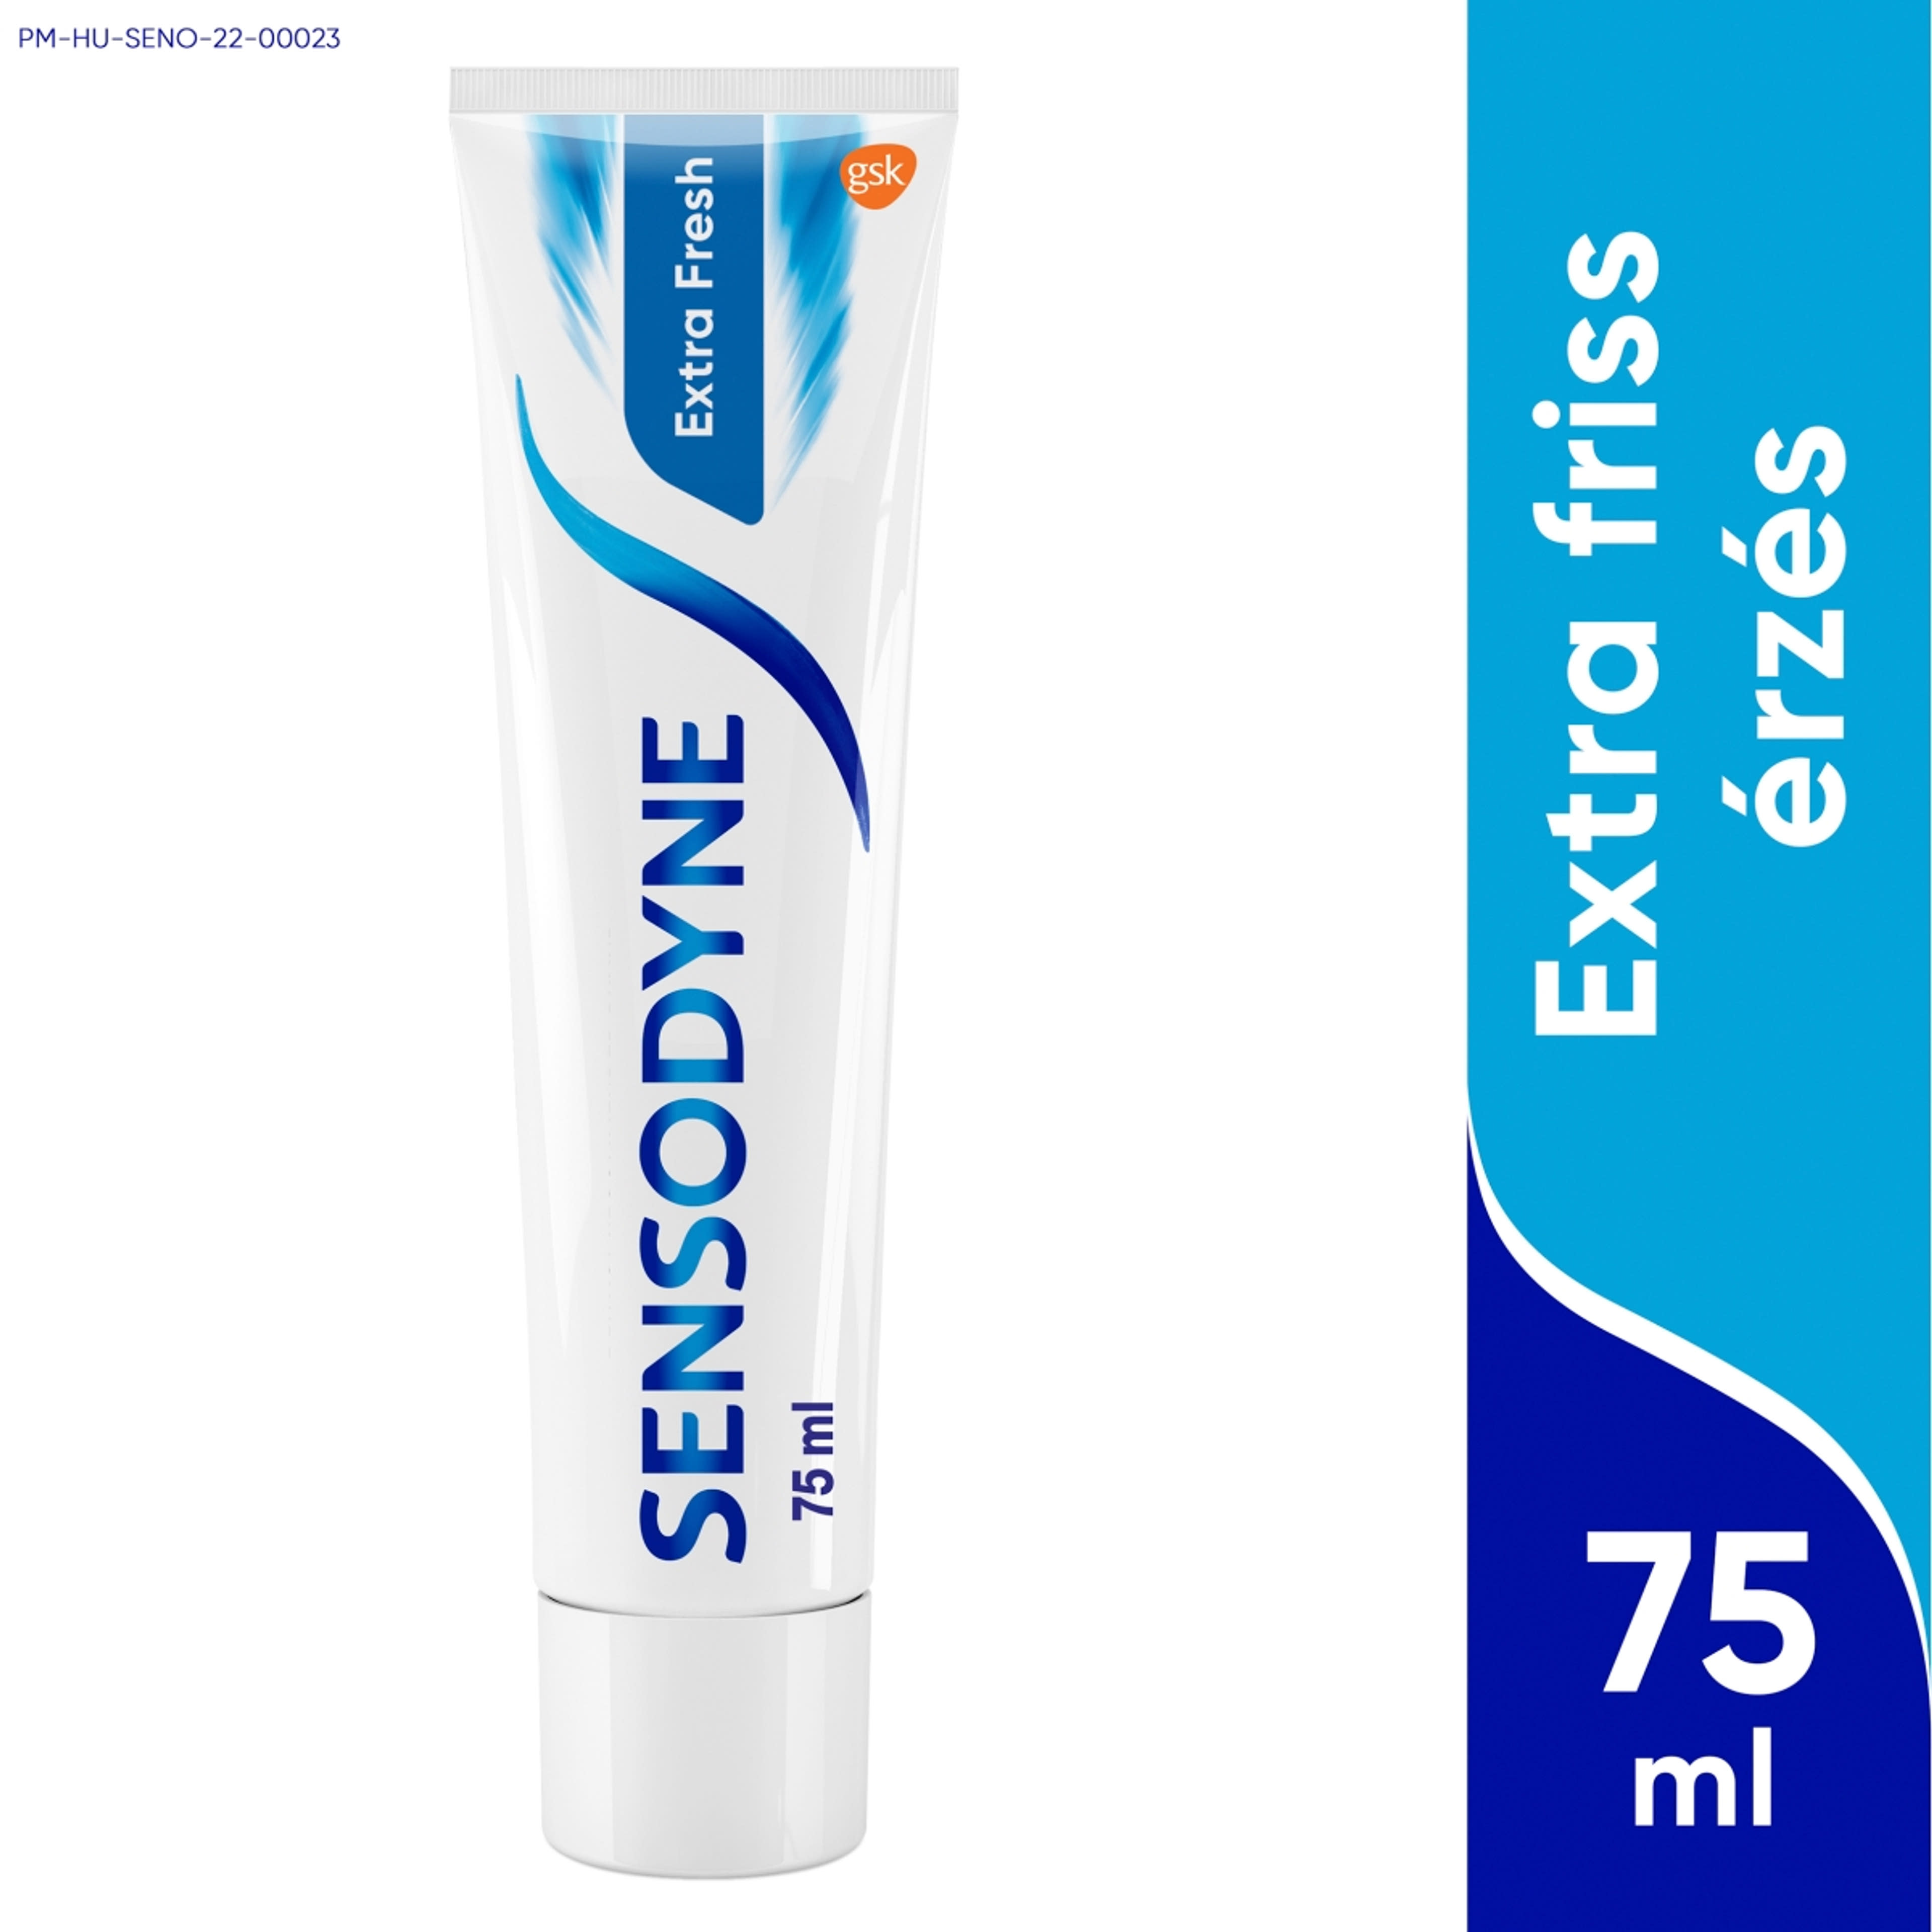 Sensodyne Extra Fresh fluoridos fogkrém - 75 ml-1